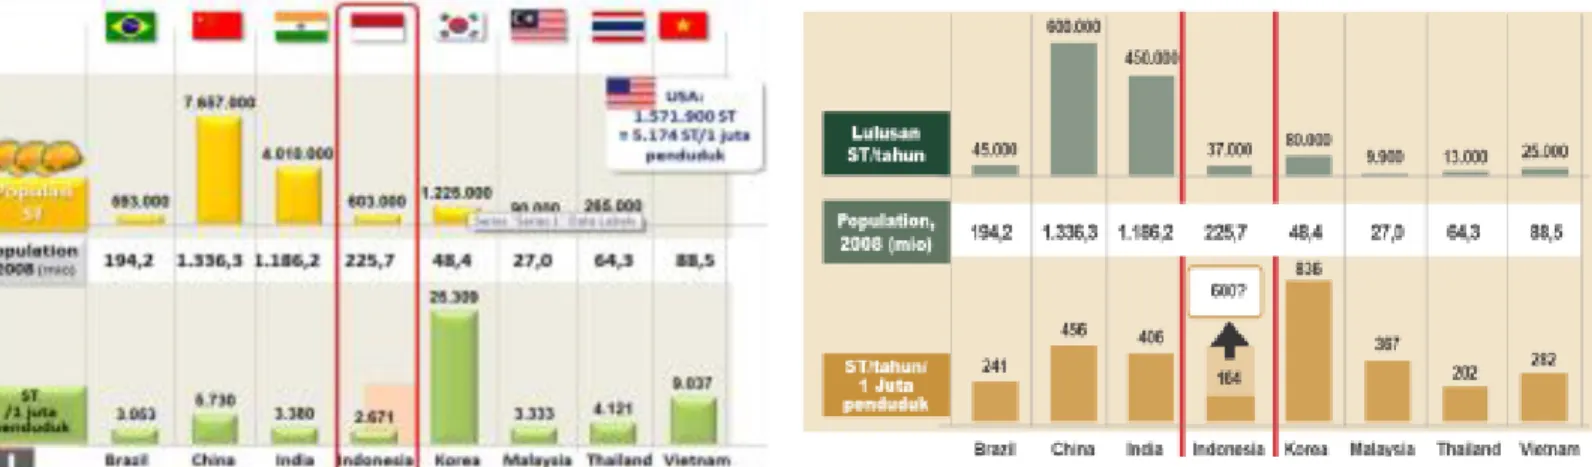 Gambar 2 Perbandingan Populasi Insinyur     Gambar 3. Perbandingan Lulusan ST/Tahun                        Sumber: Persatuan Insinyur Indonesia 2014                                Sumber: Persatuan Insinyur Indonesia 2014 